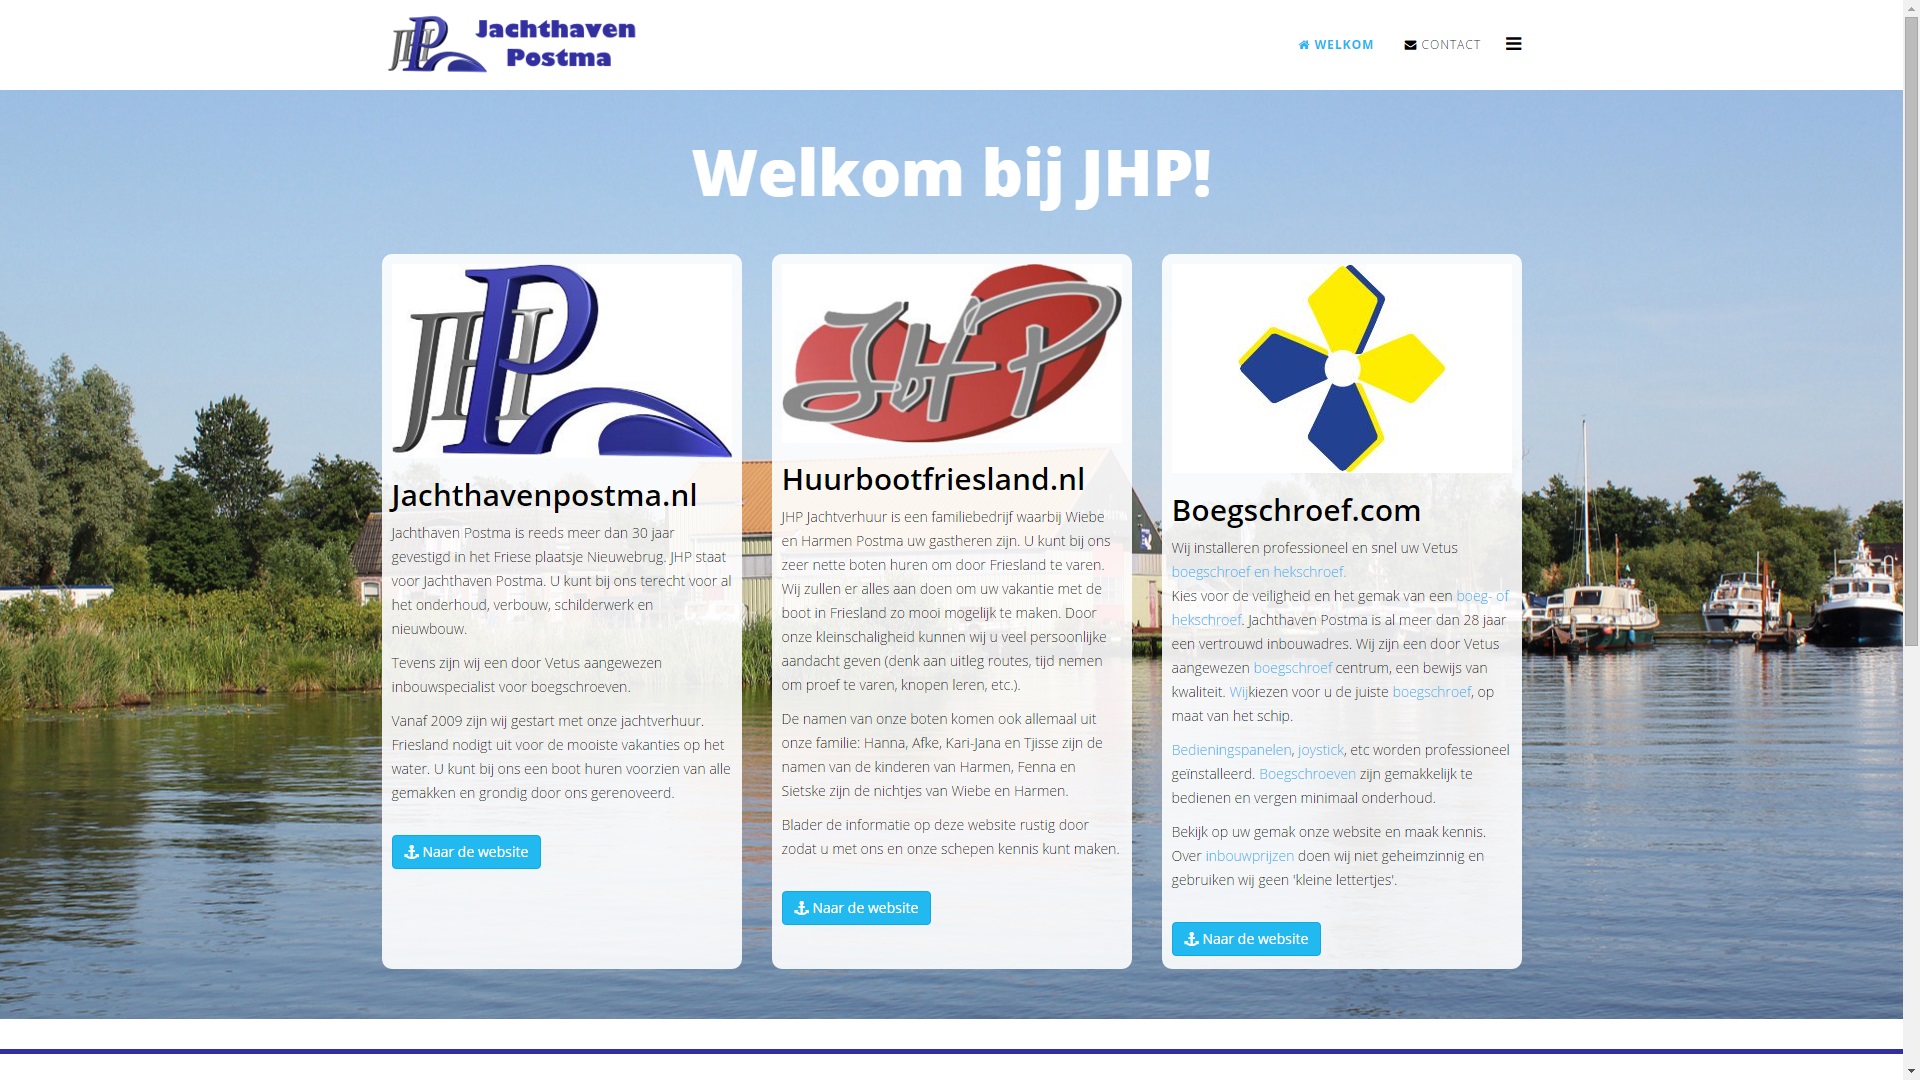 (c) Jachthavenpostma.nl